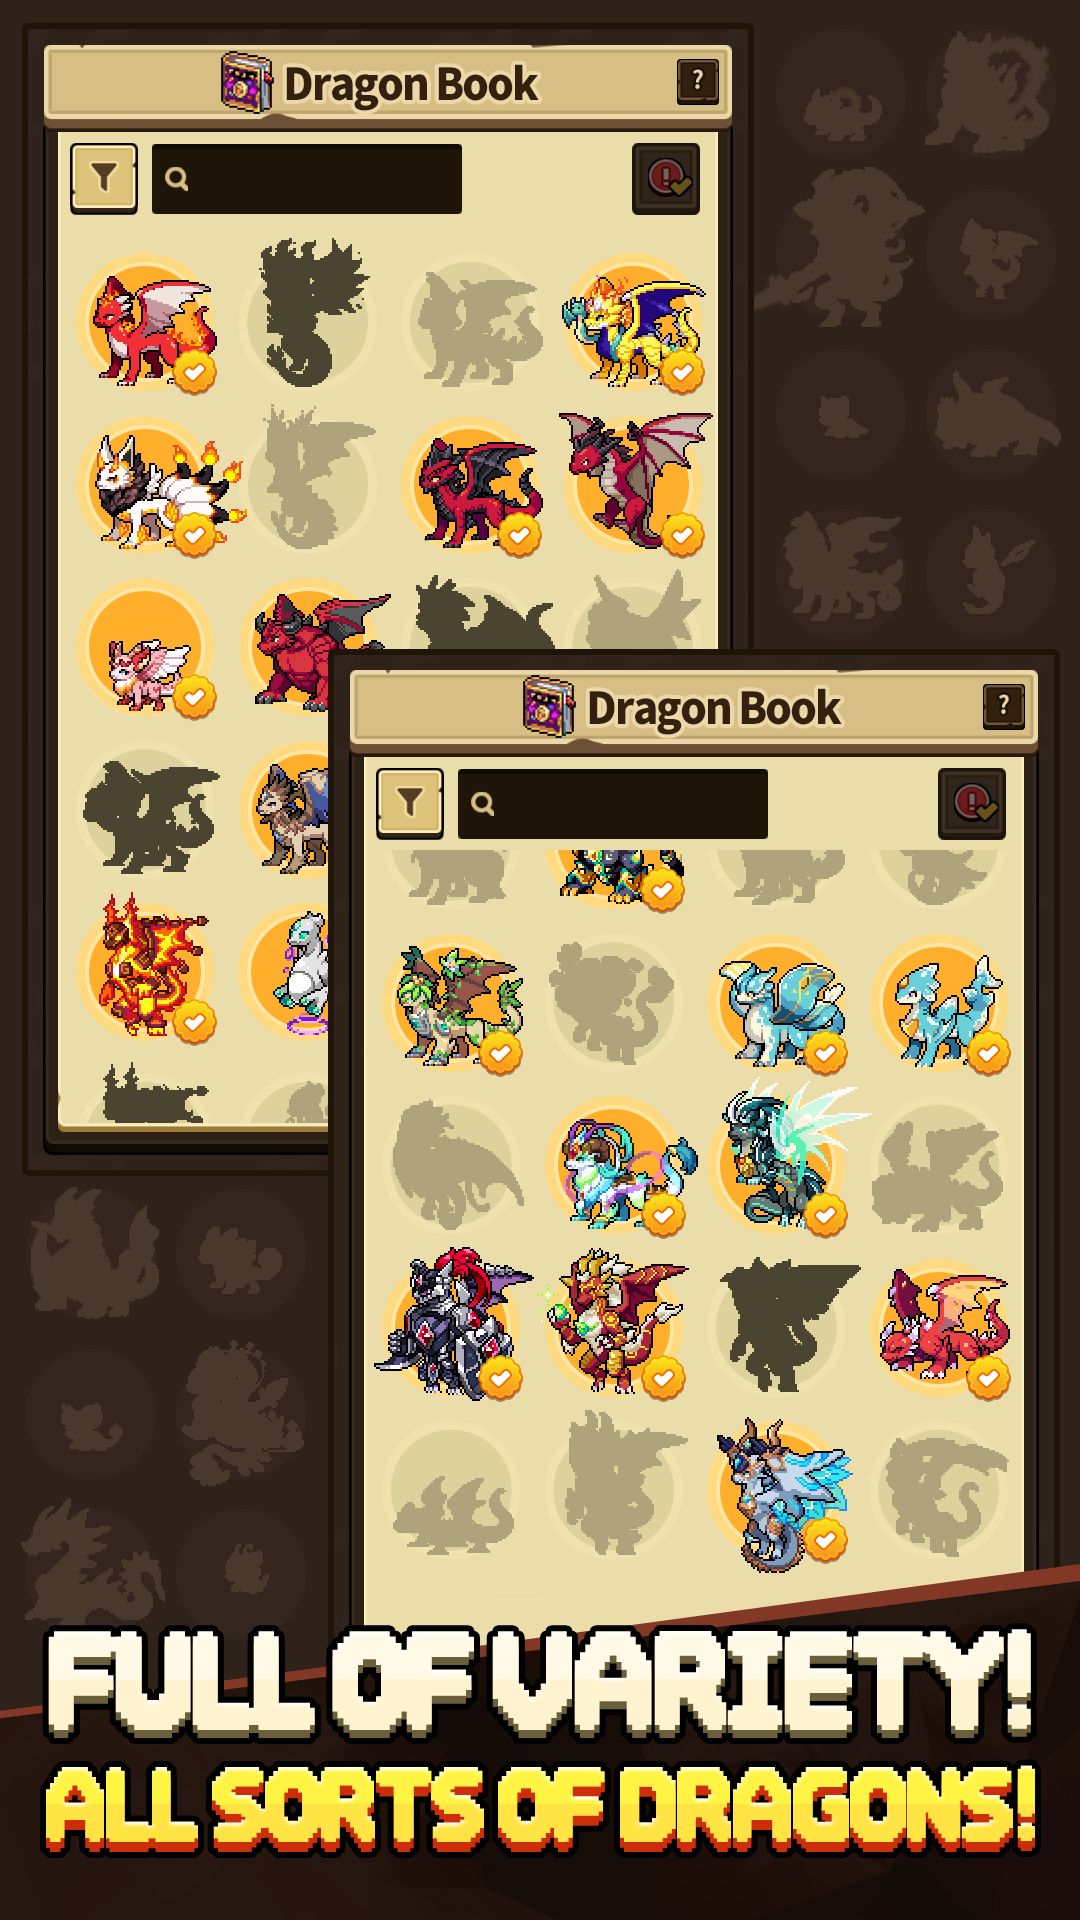 Dragon Village Collection